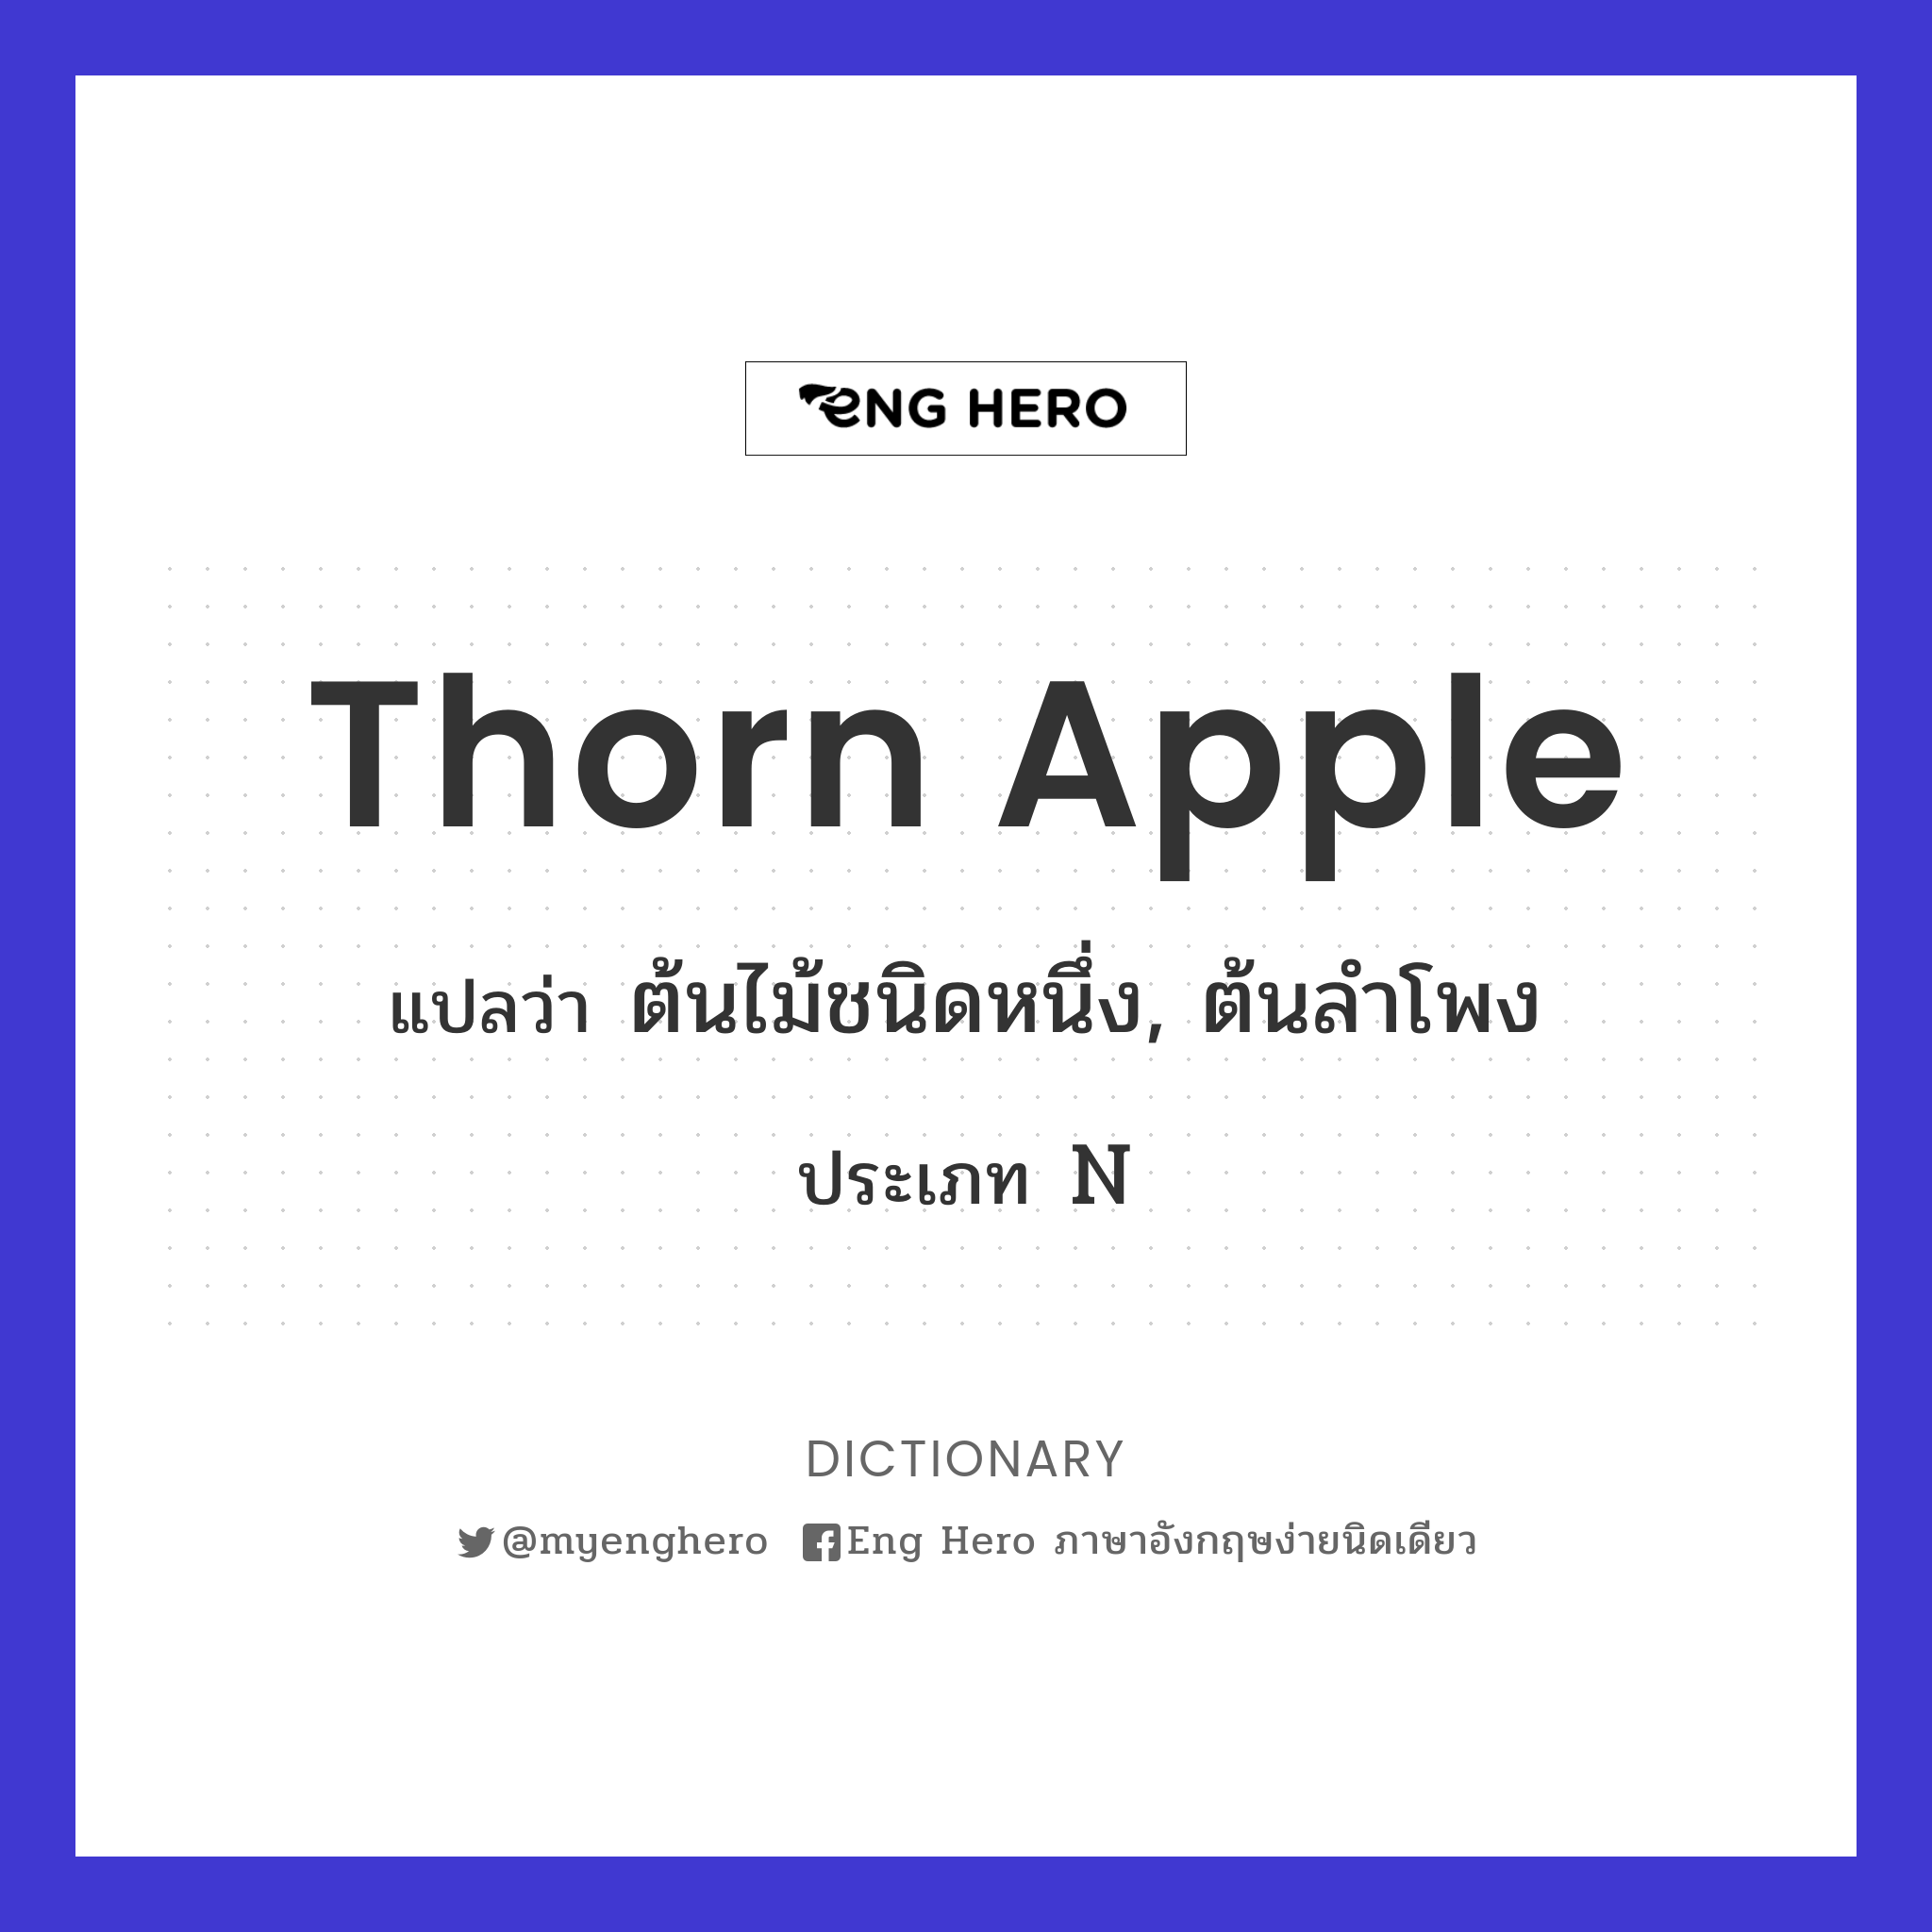 thorn apple